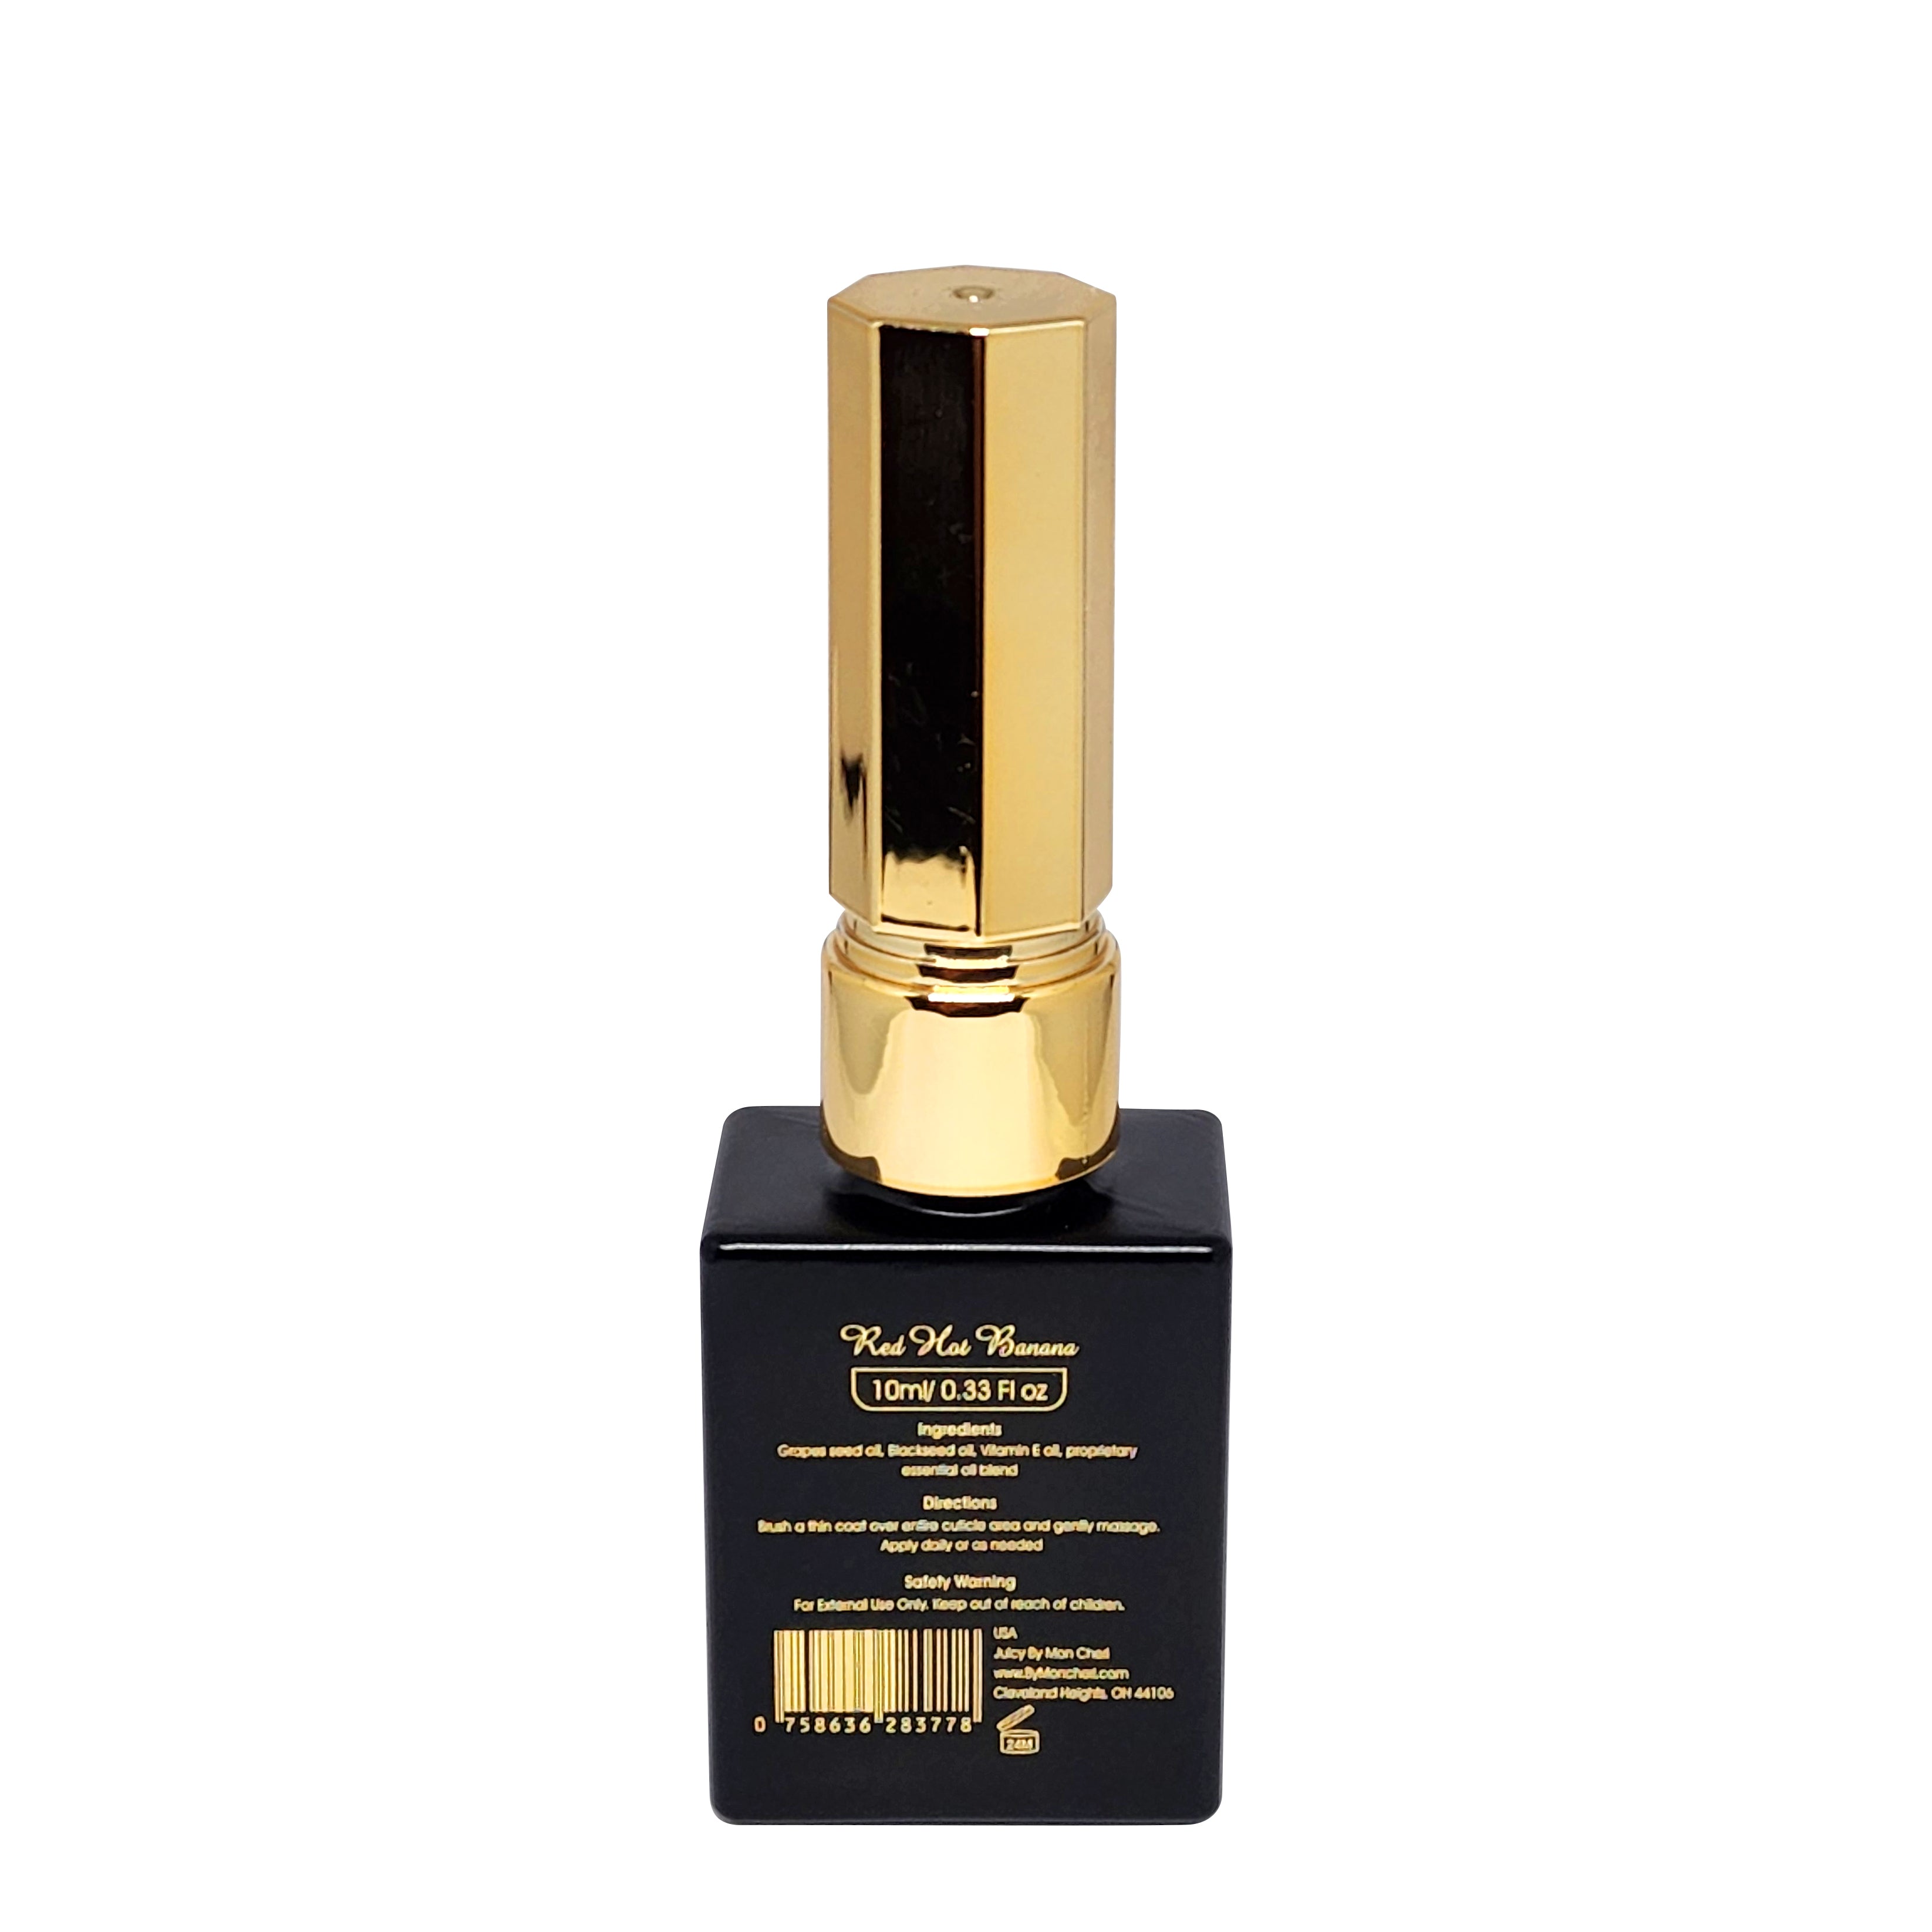 Allure Pheromone cuticle oil ( Golden Touch model) Juicy by Mon Cheri